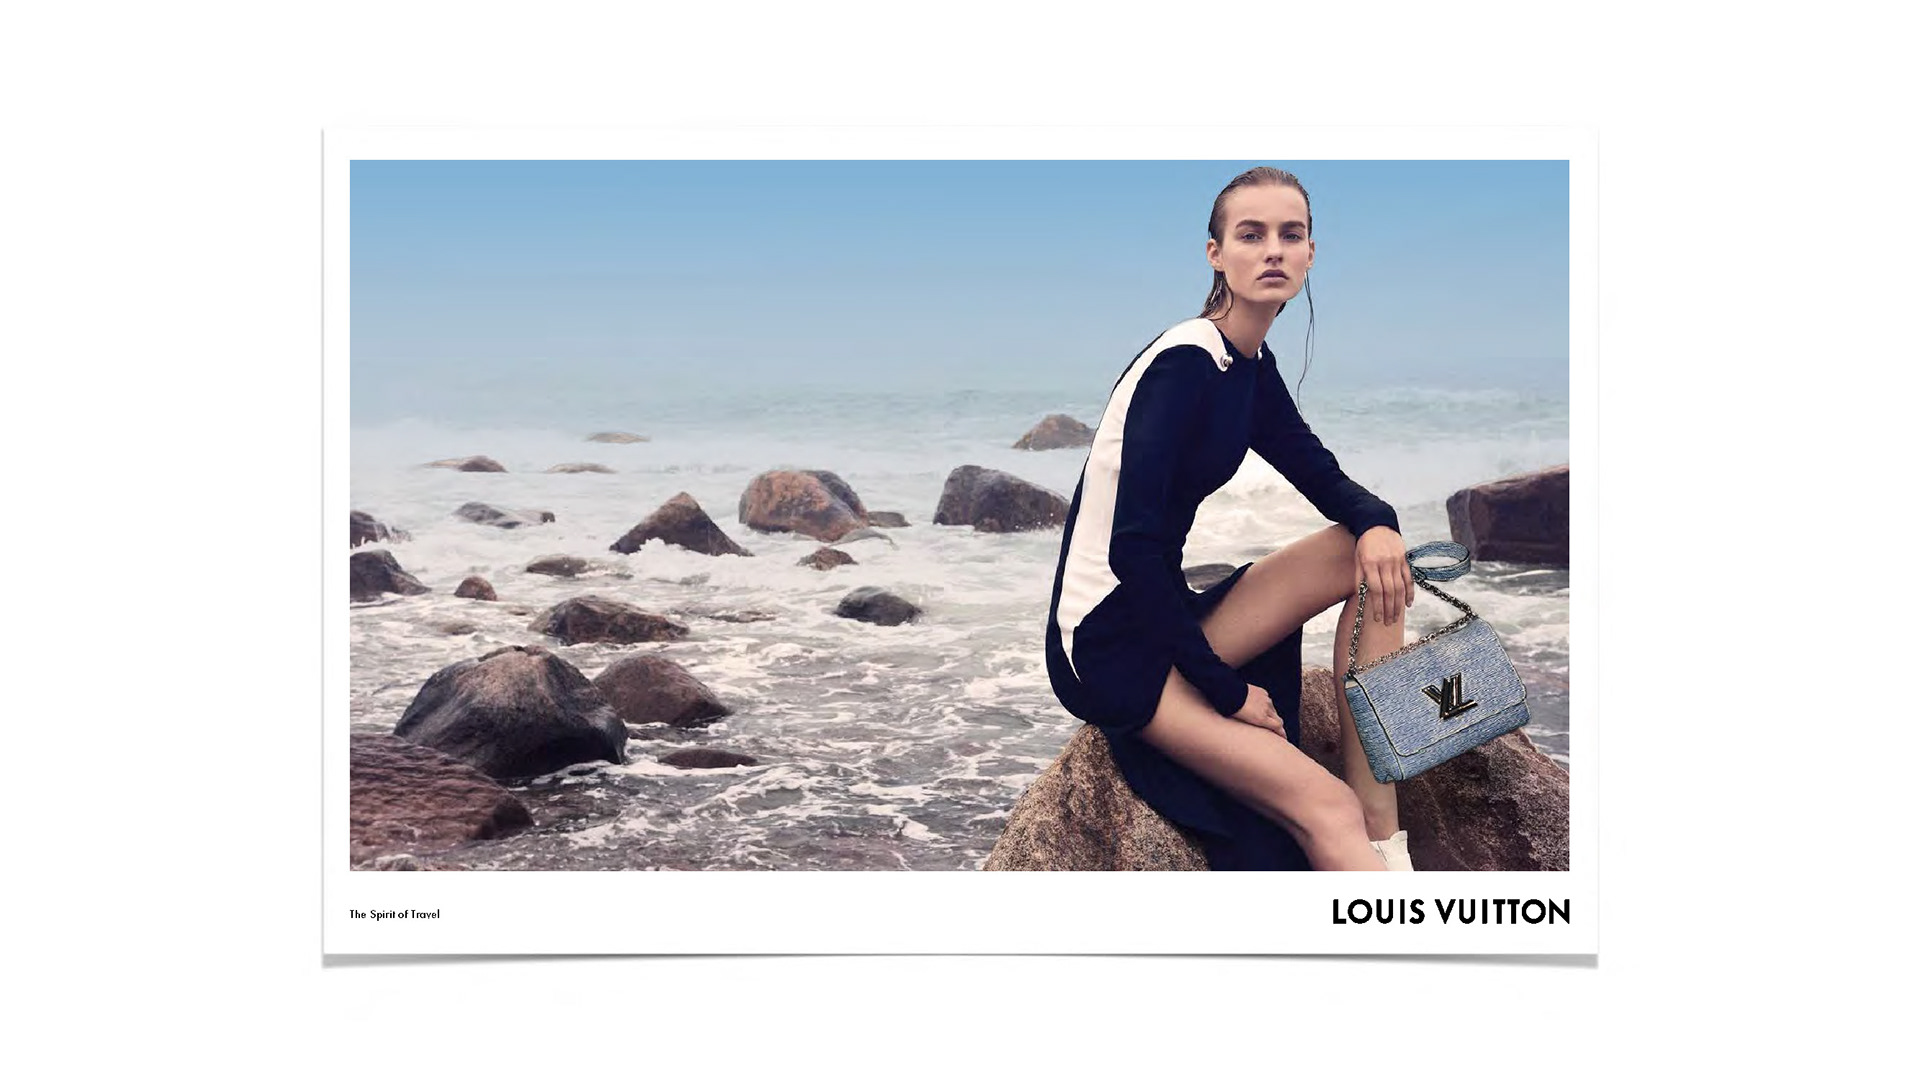 Louis Vuitton Spirit of Travel 2019 Campaign